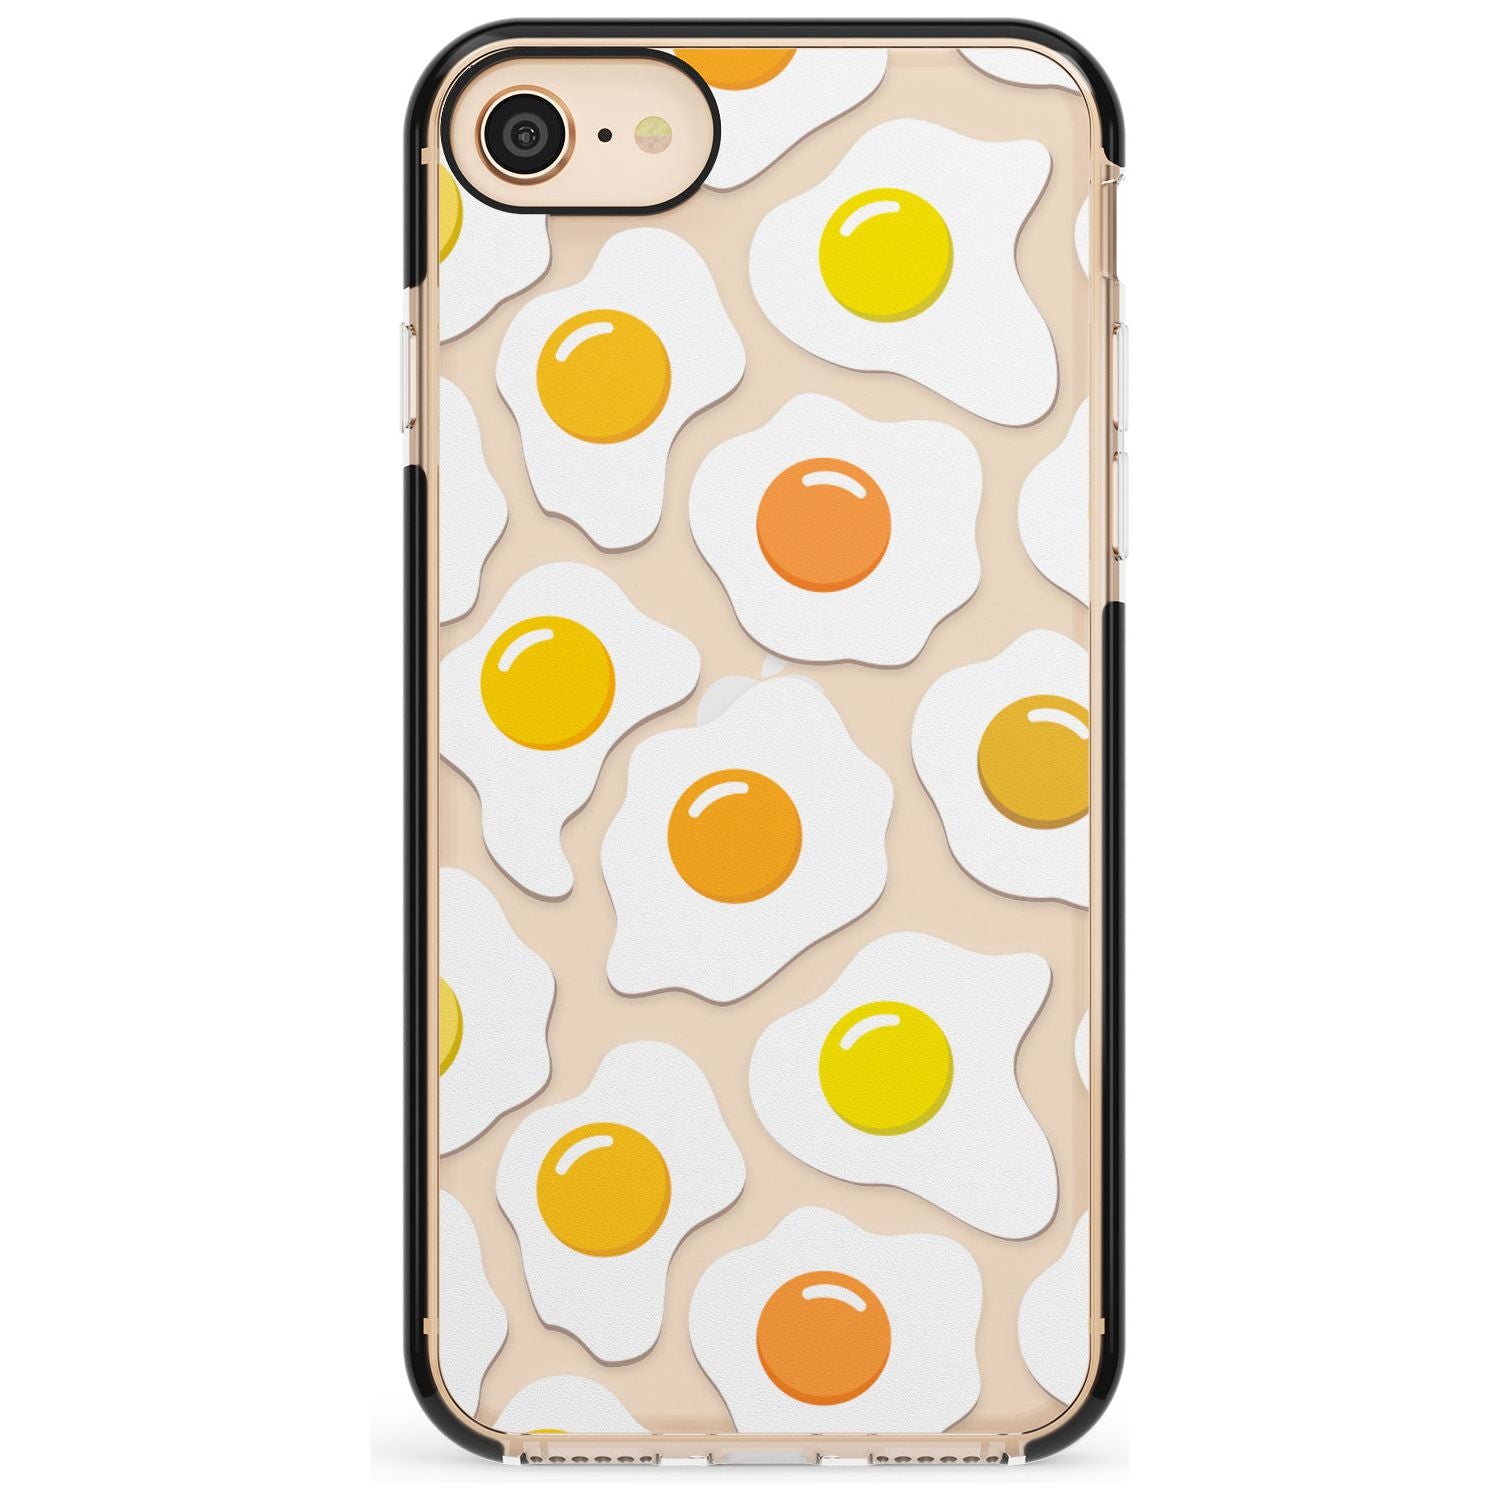 Fried Egg Pattern Black Impact Phone Case for iPhone SE 8 7 Plus